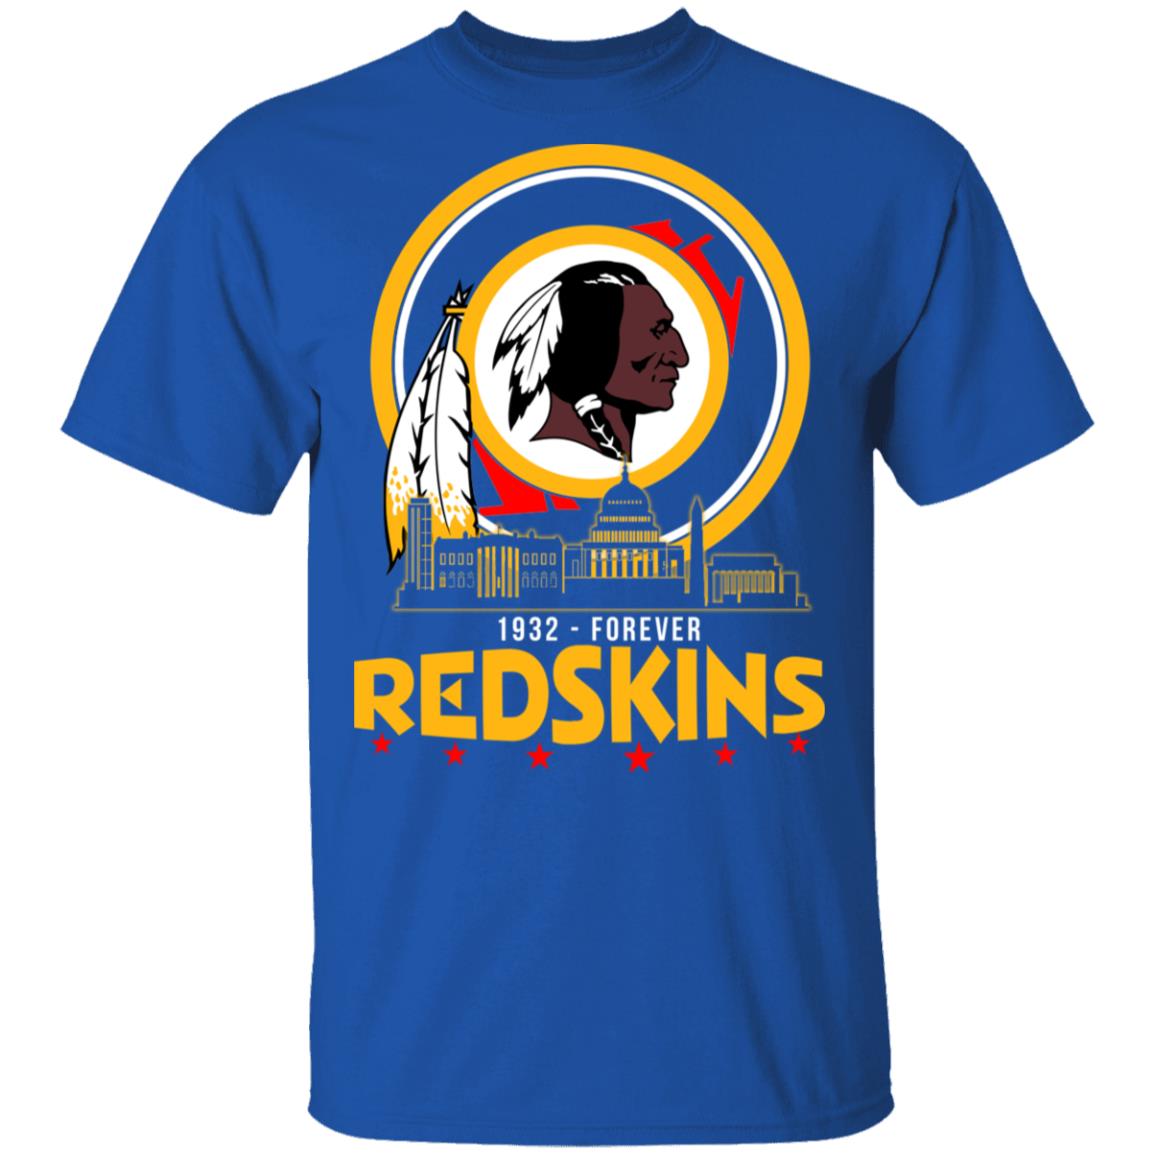 Washington Redskins:  to stop selling merchandise